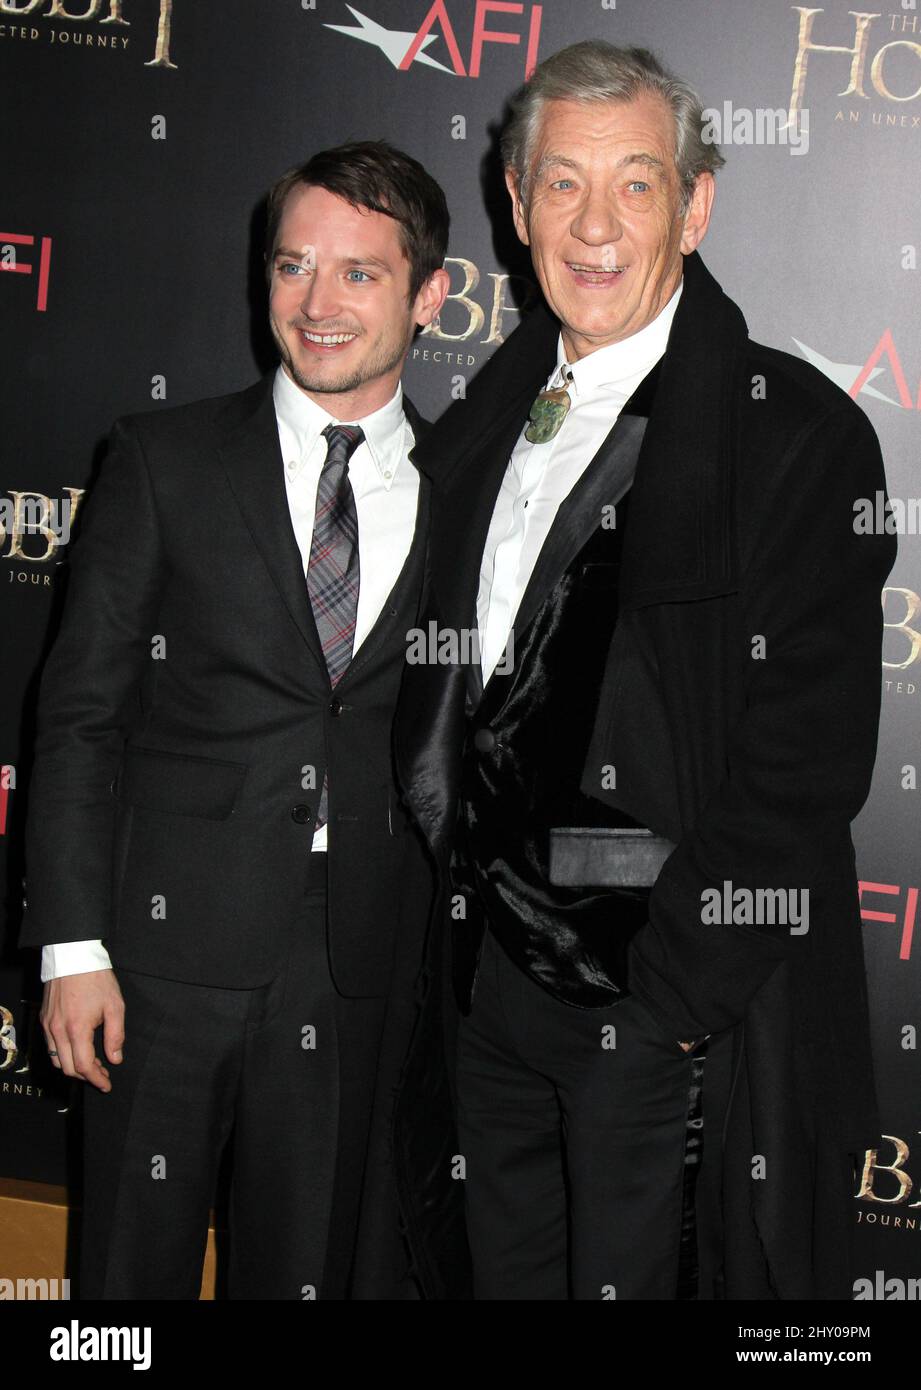 Elijah Wood and Ian McKellen attending 'The Hobbit: An Unexpected Journey' premiere held at The Ziegfeld Theatre in New York, USA. Stock Photo